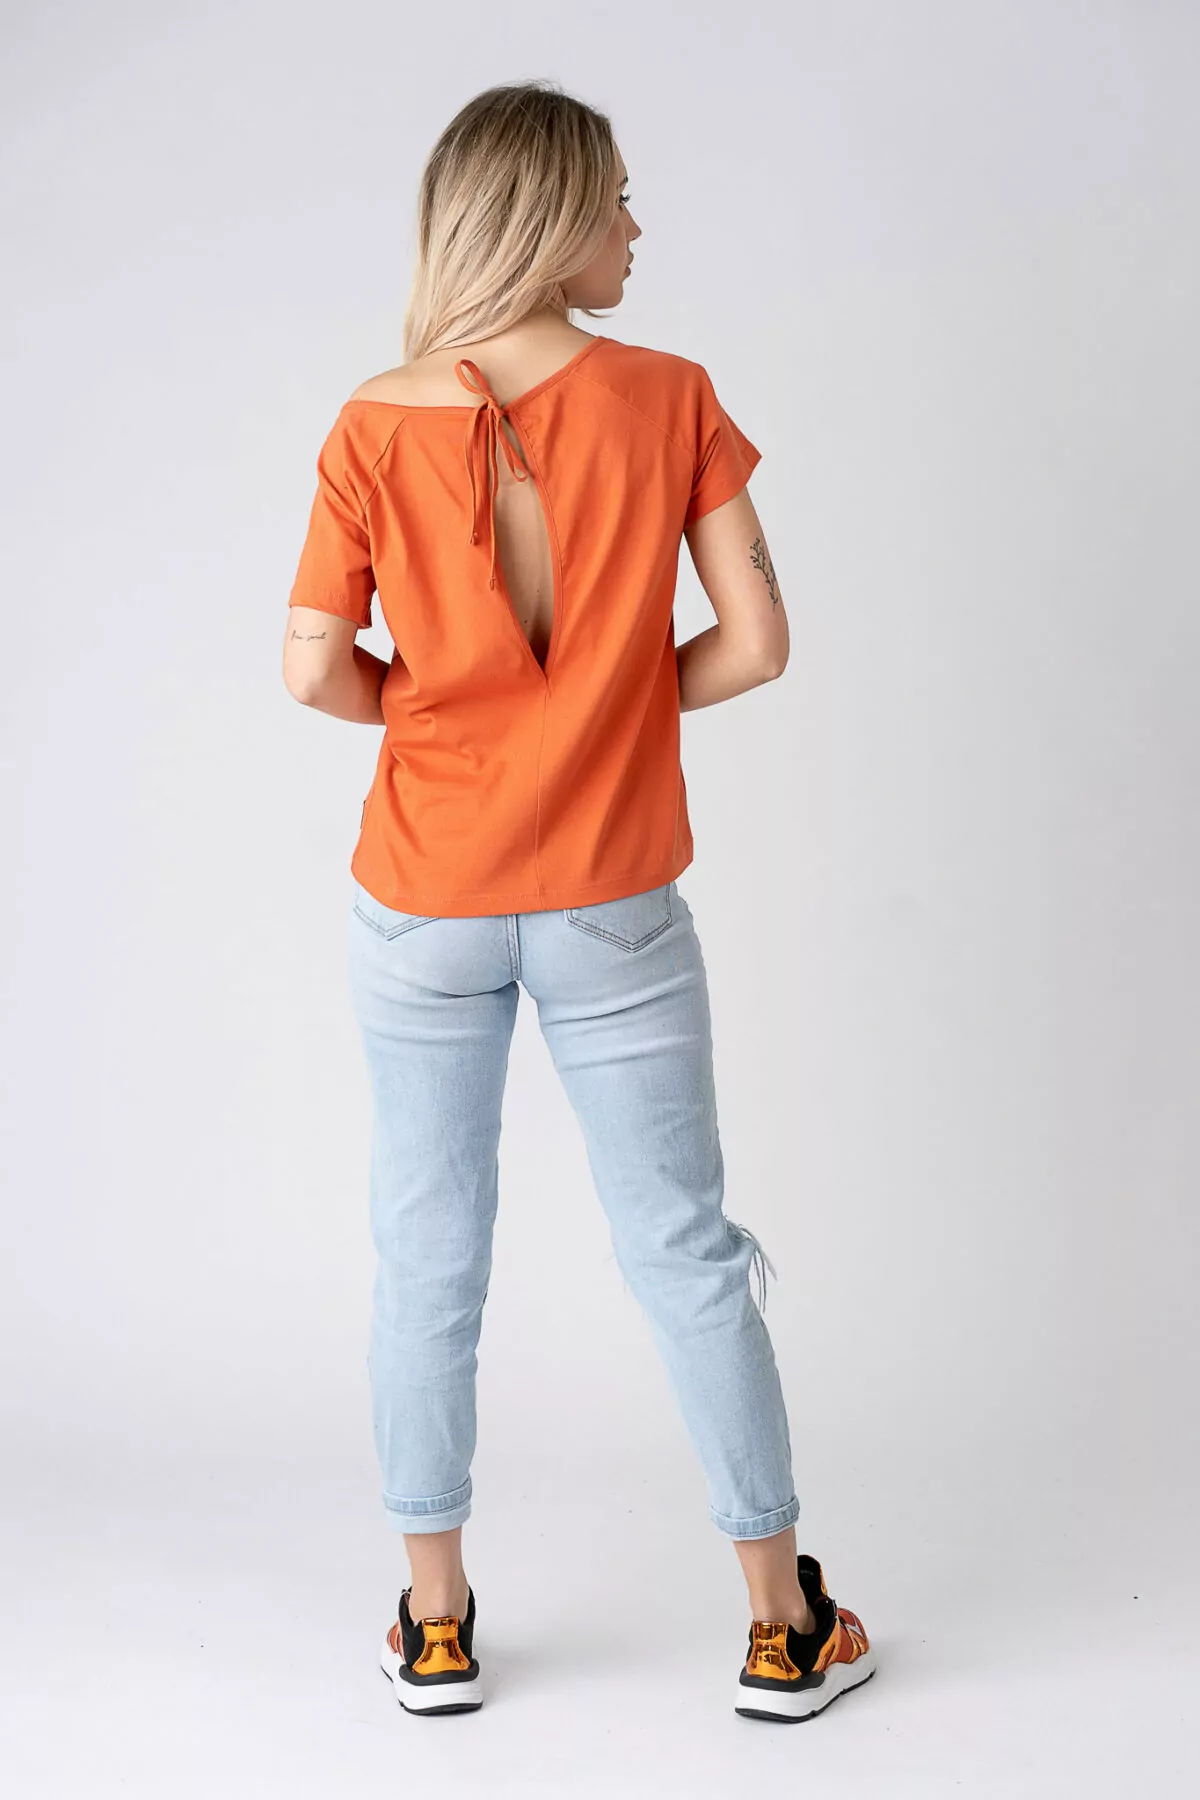 Bluzka damska koszulka pomarańczowa